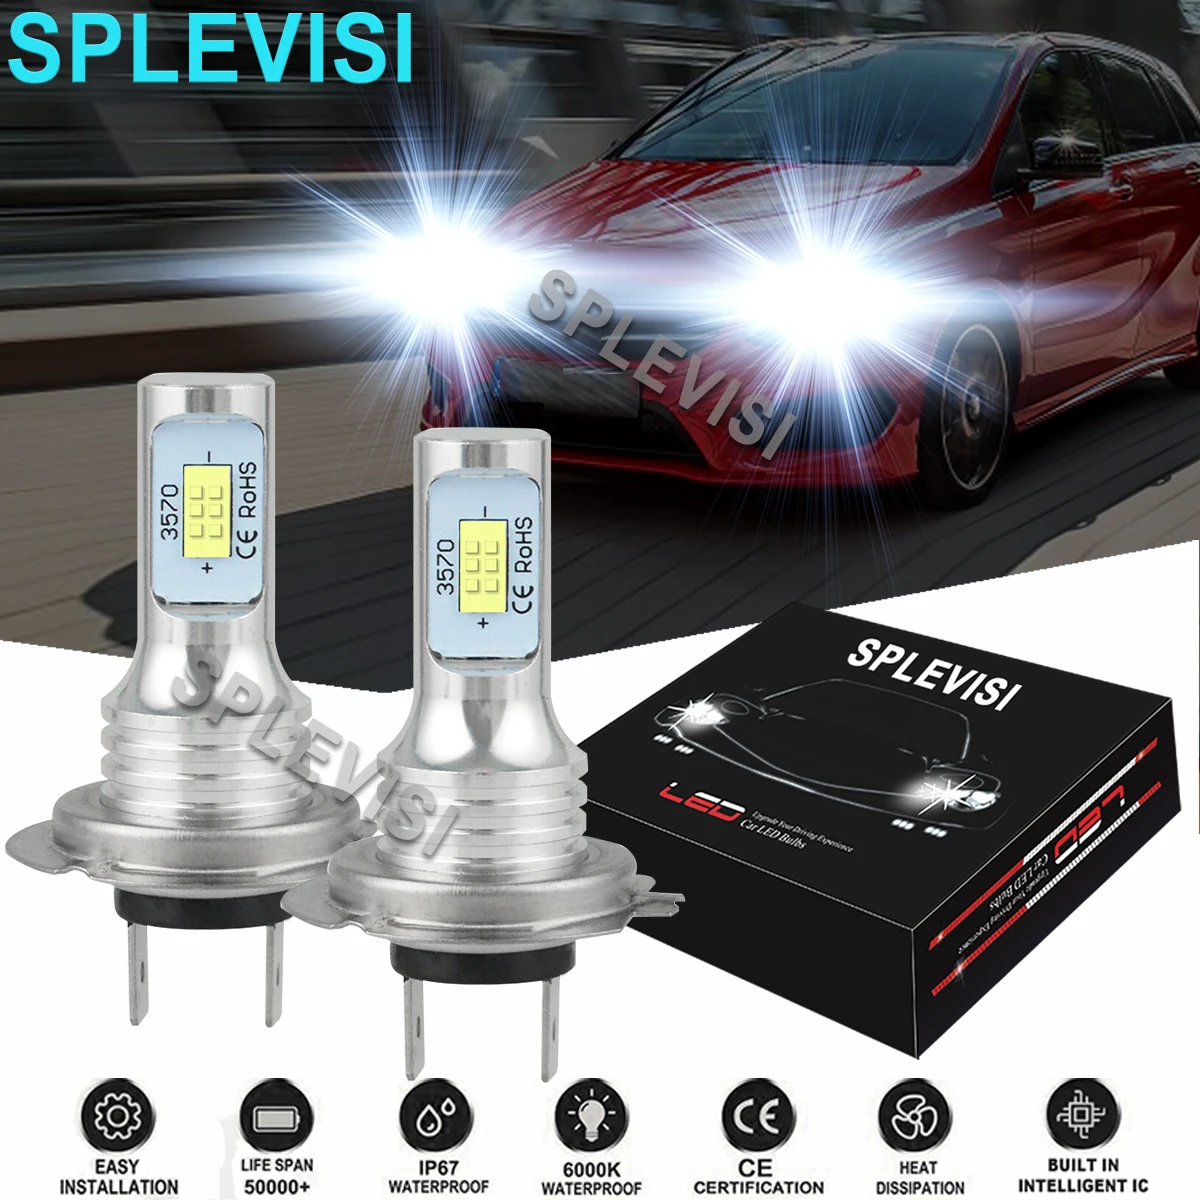 

2PCS Car LED Headlight Hi/Low Beam bulbs 6000K White For Benz B250 2013-19 Benz S430 S500 S600 03-07 Mercedes Benz ML350 06-11